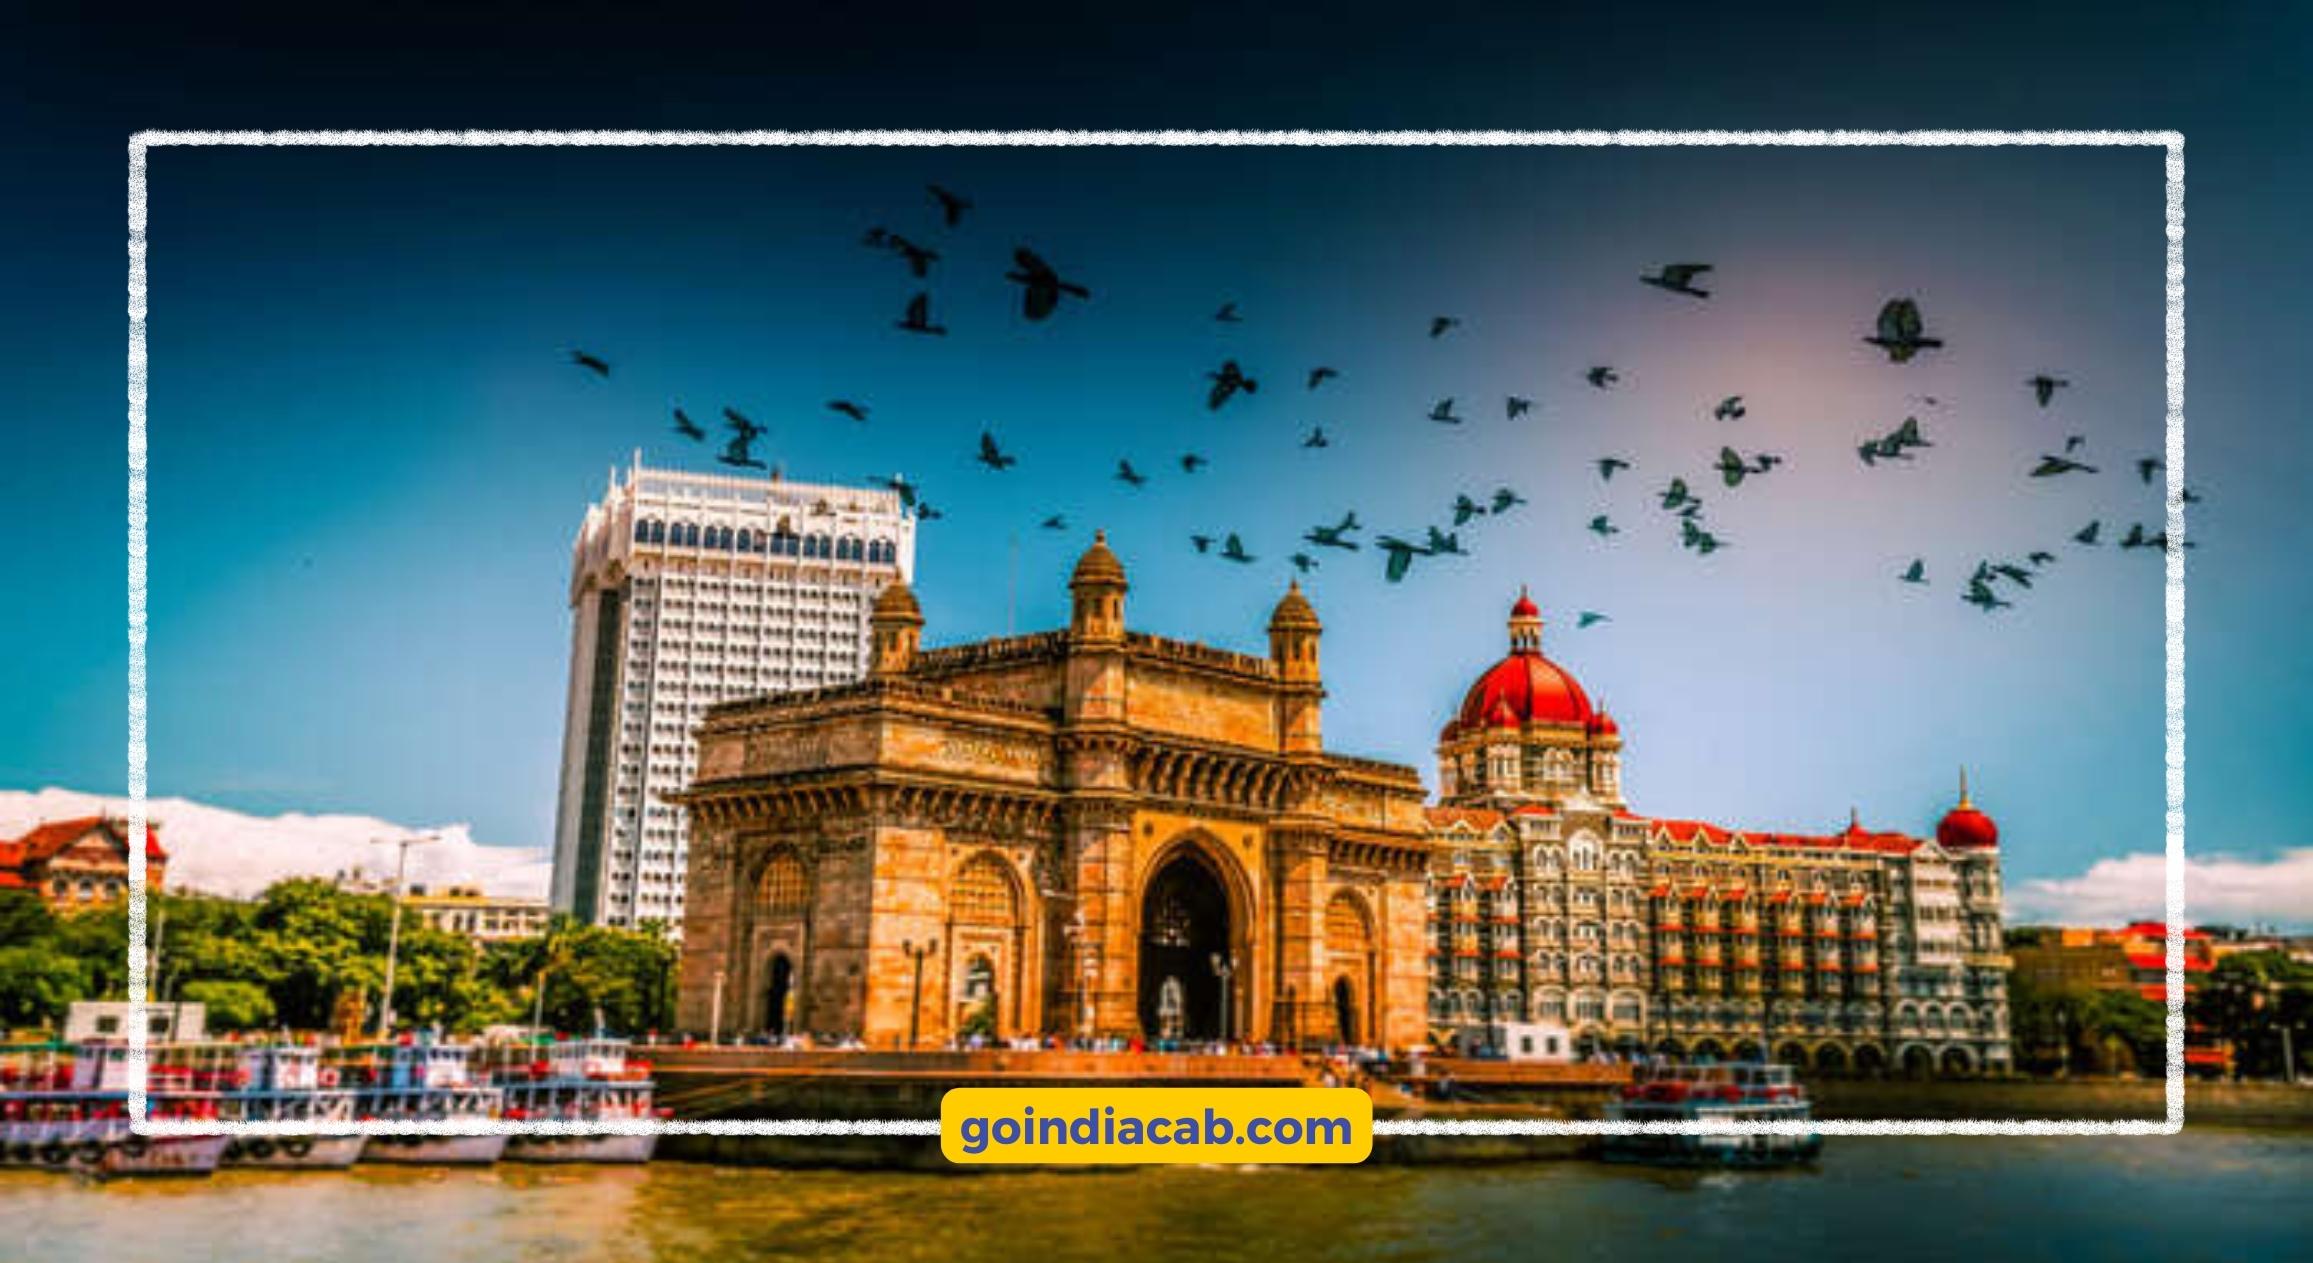  Tour 2 Image in Mumbai goindiacab